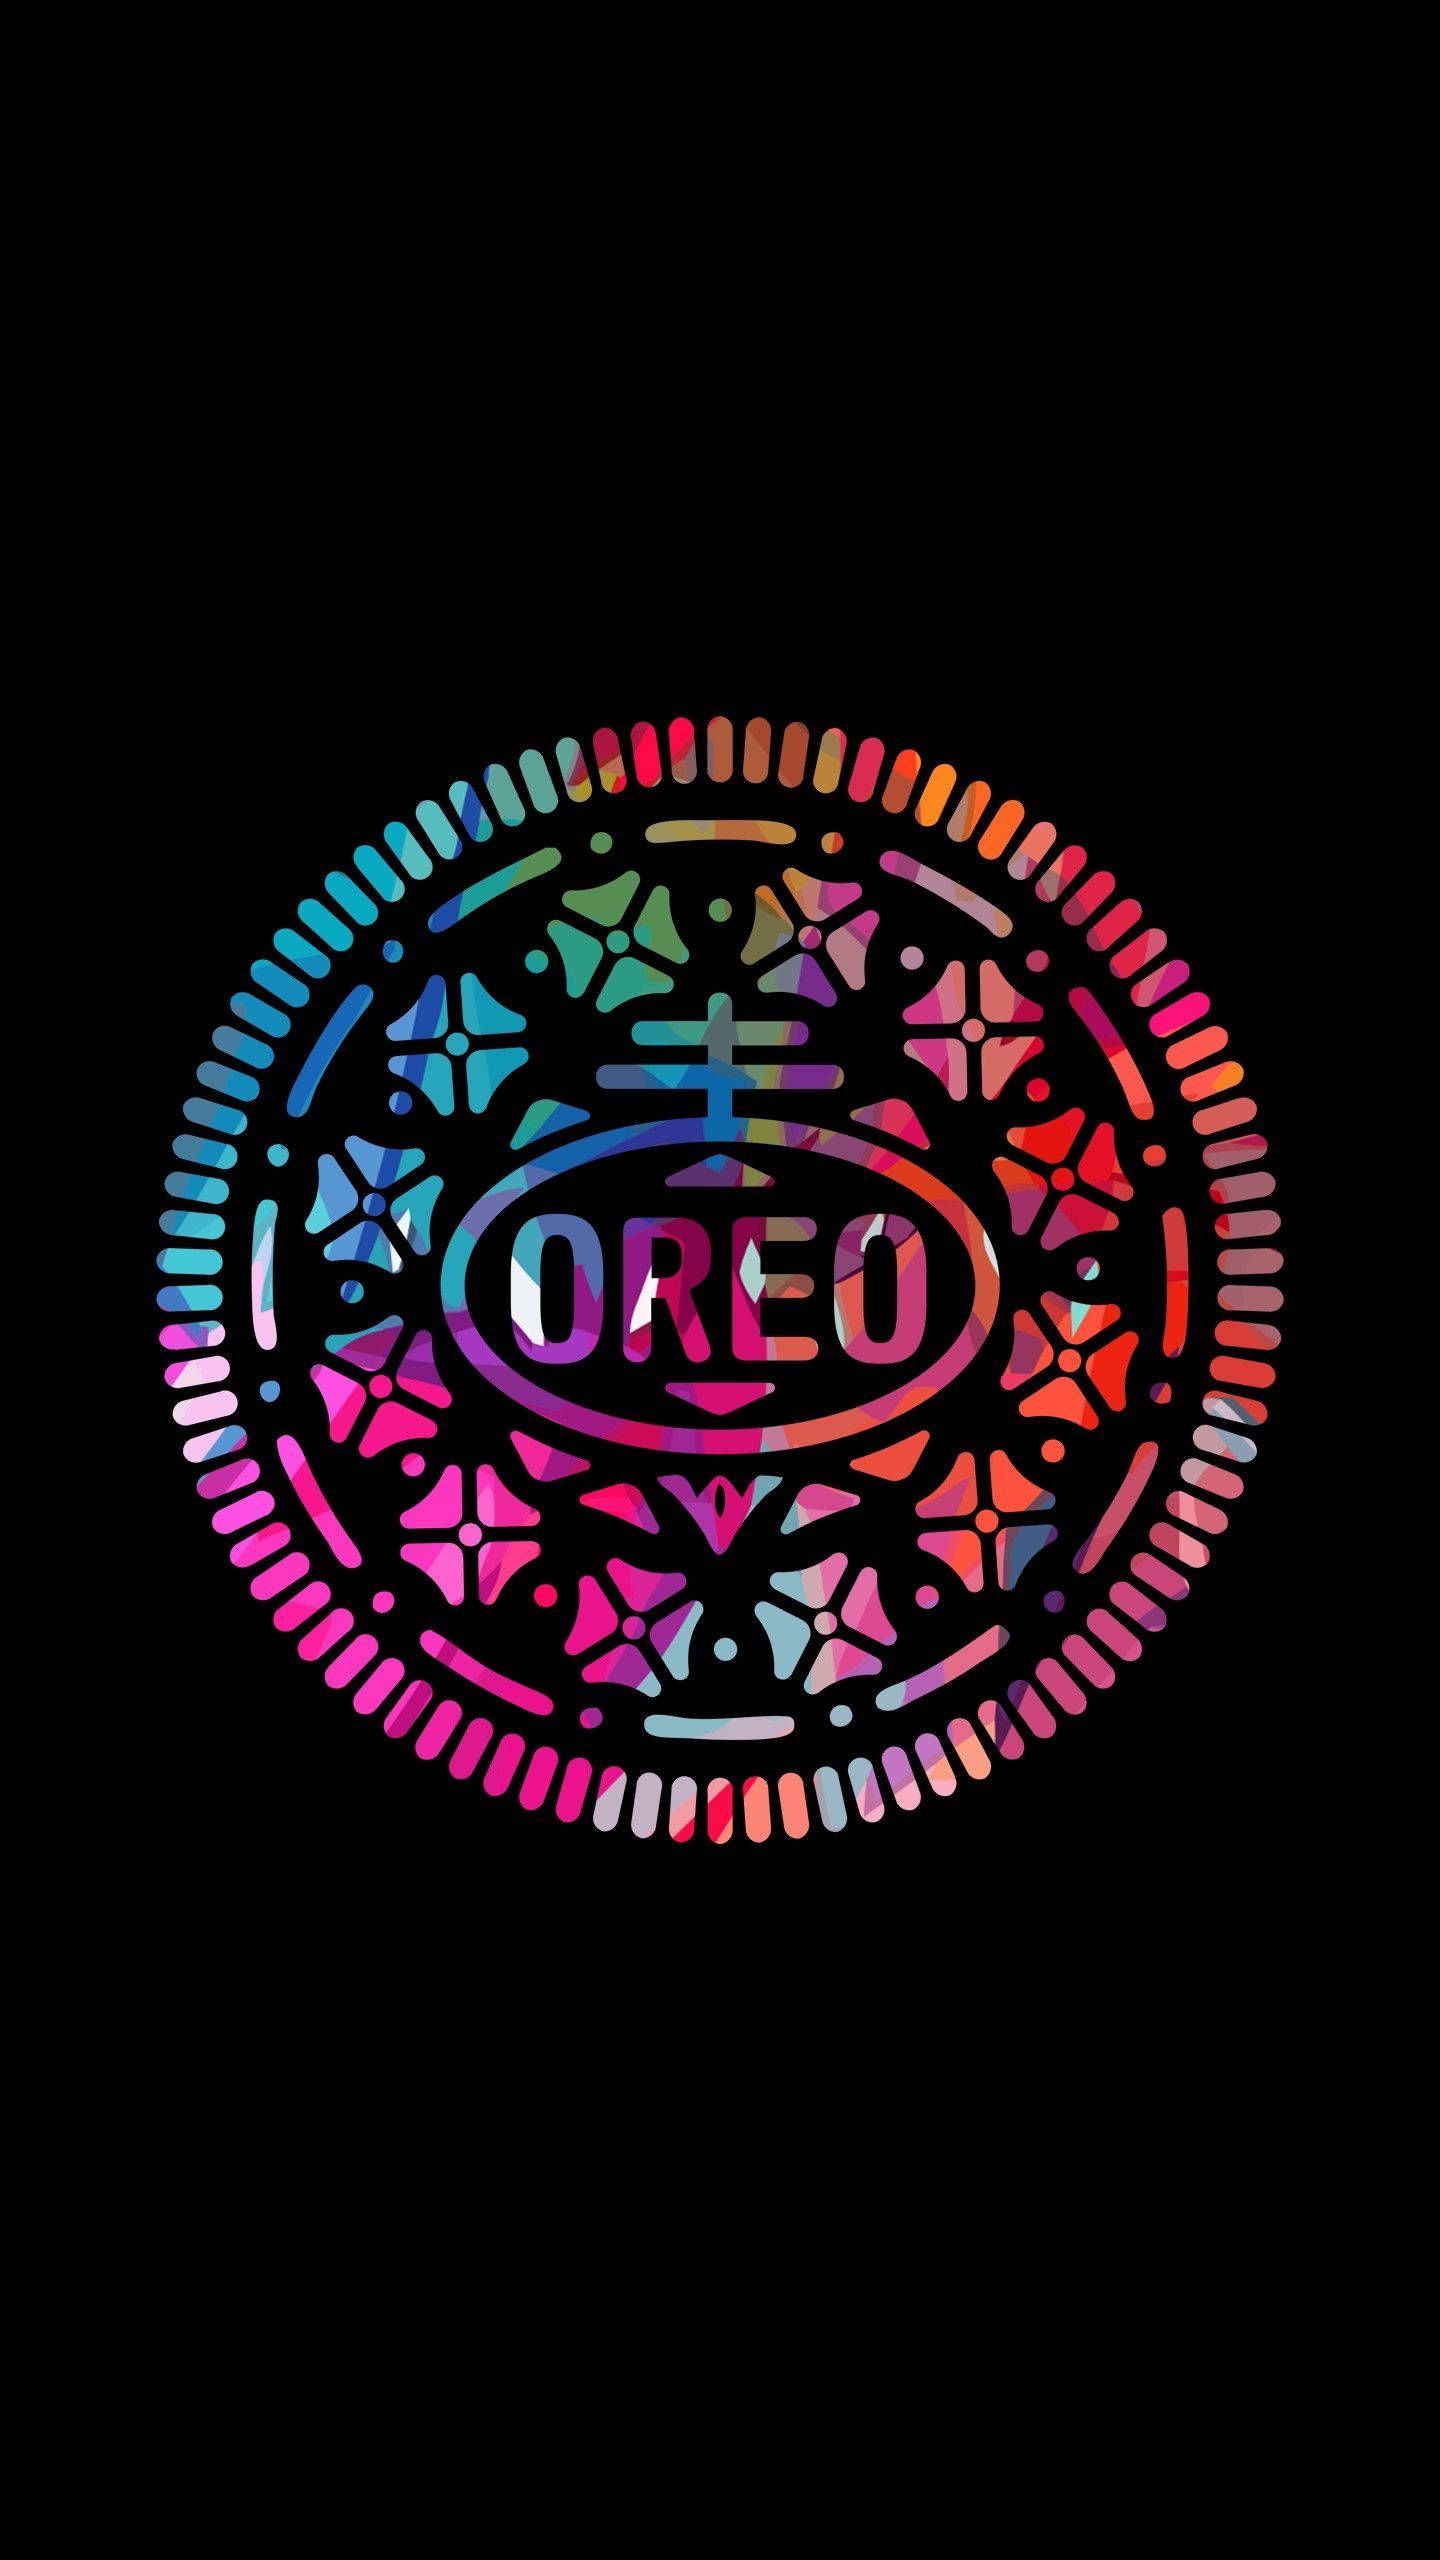 The image of a colorful logo for oreo - Oreo